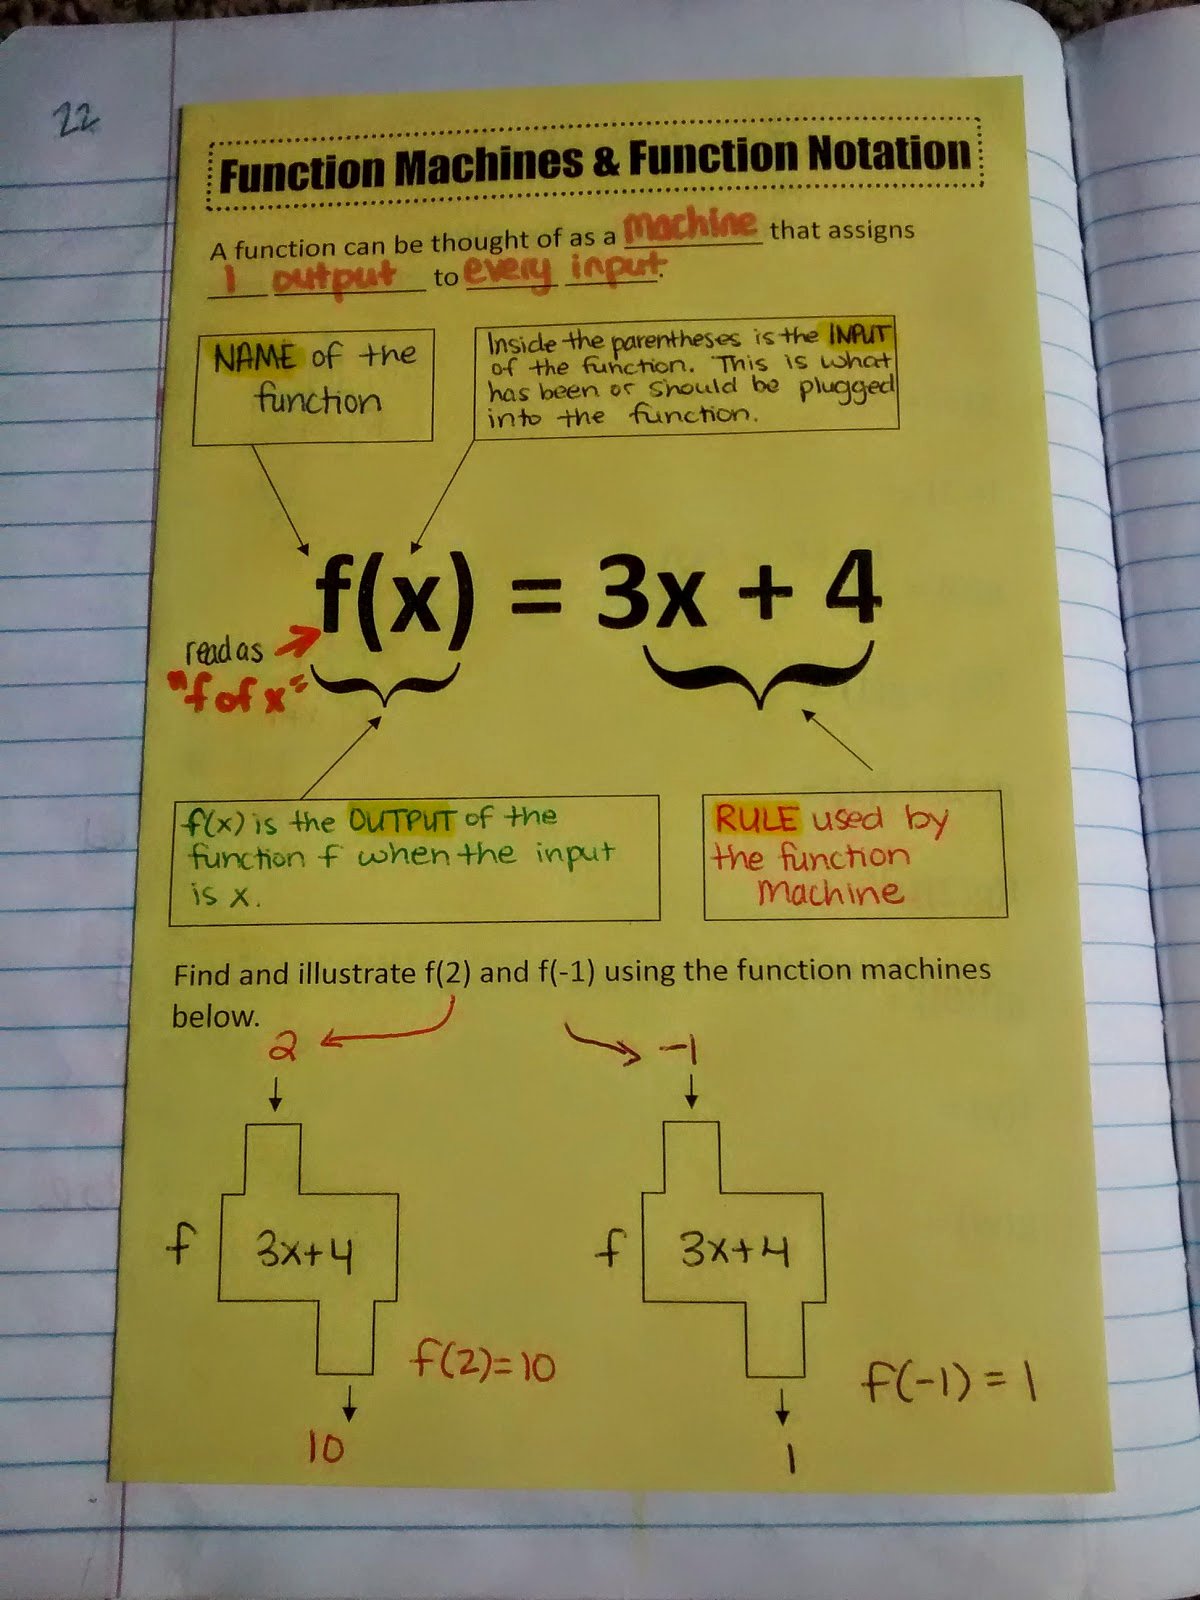 Function Notation Worksheet Answers Inspirational Math = Love 2014 2015 Algebra 1 Unit 1 Interactive